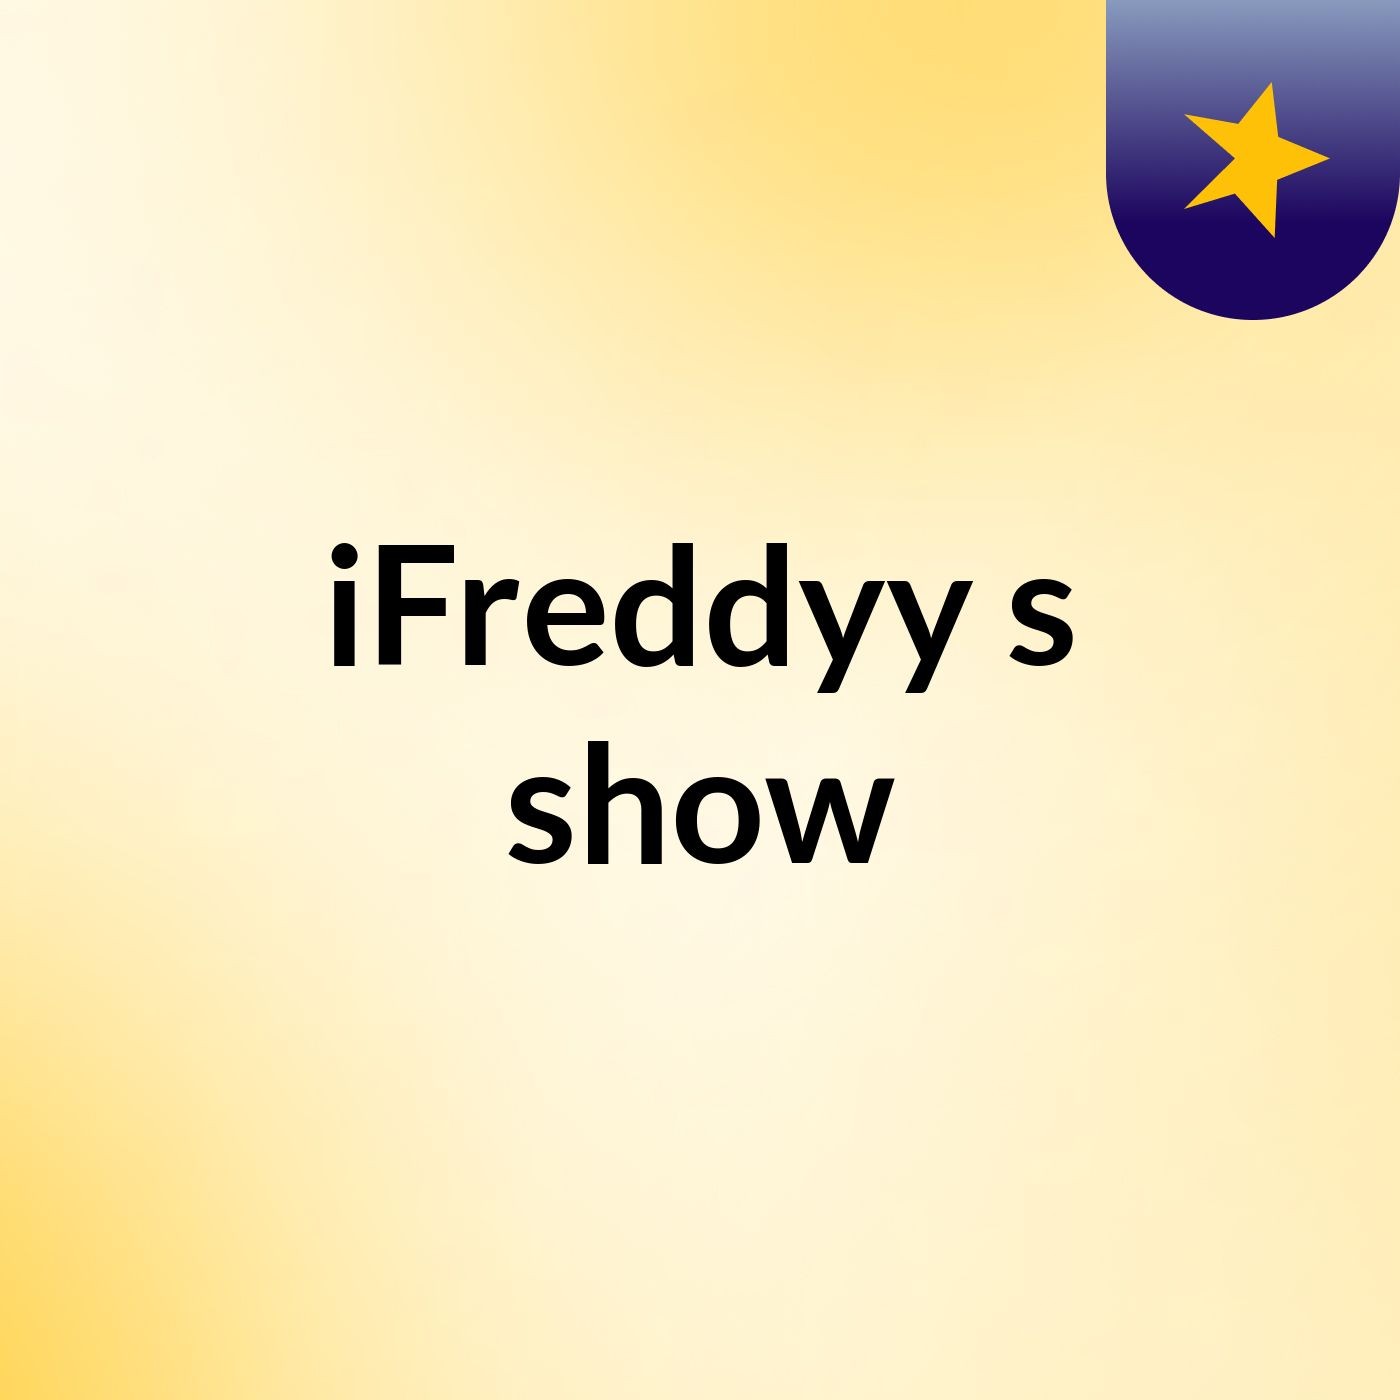 iFreddyy's show